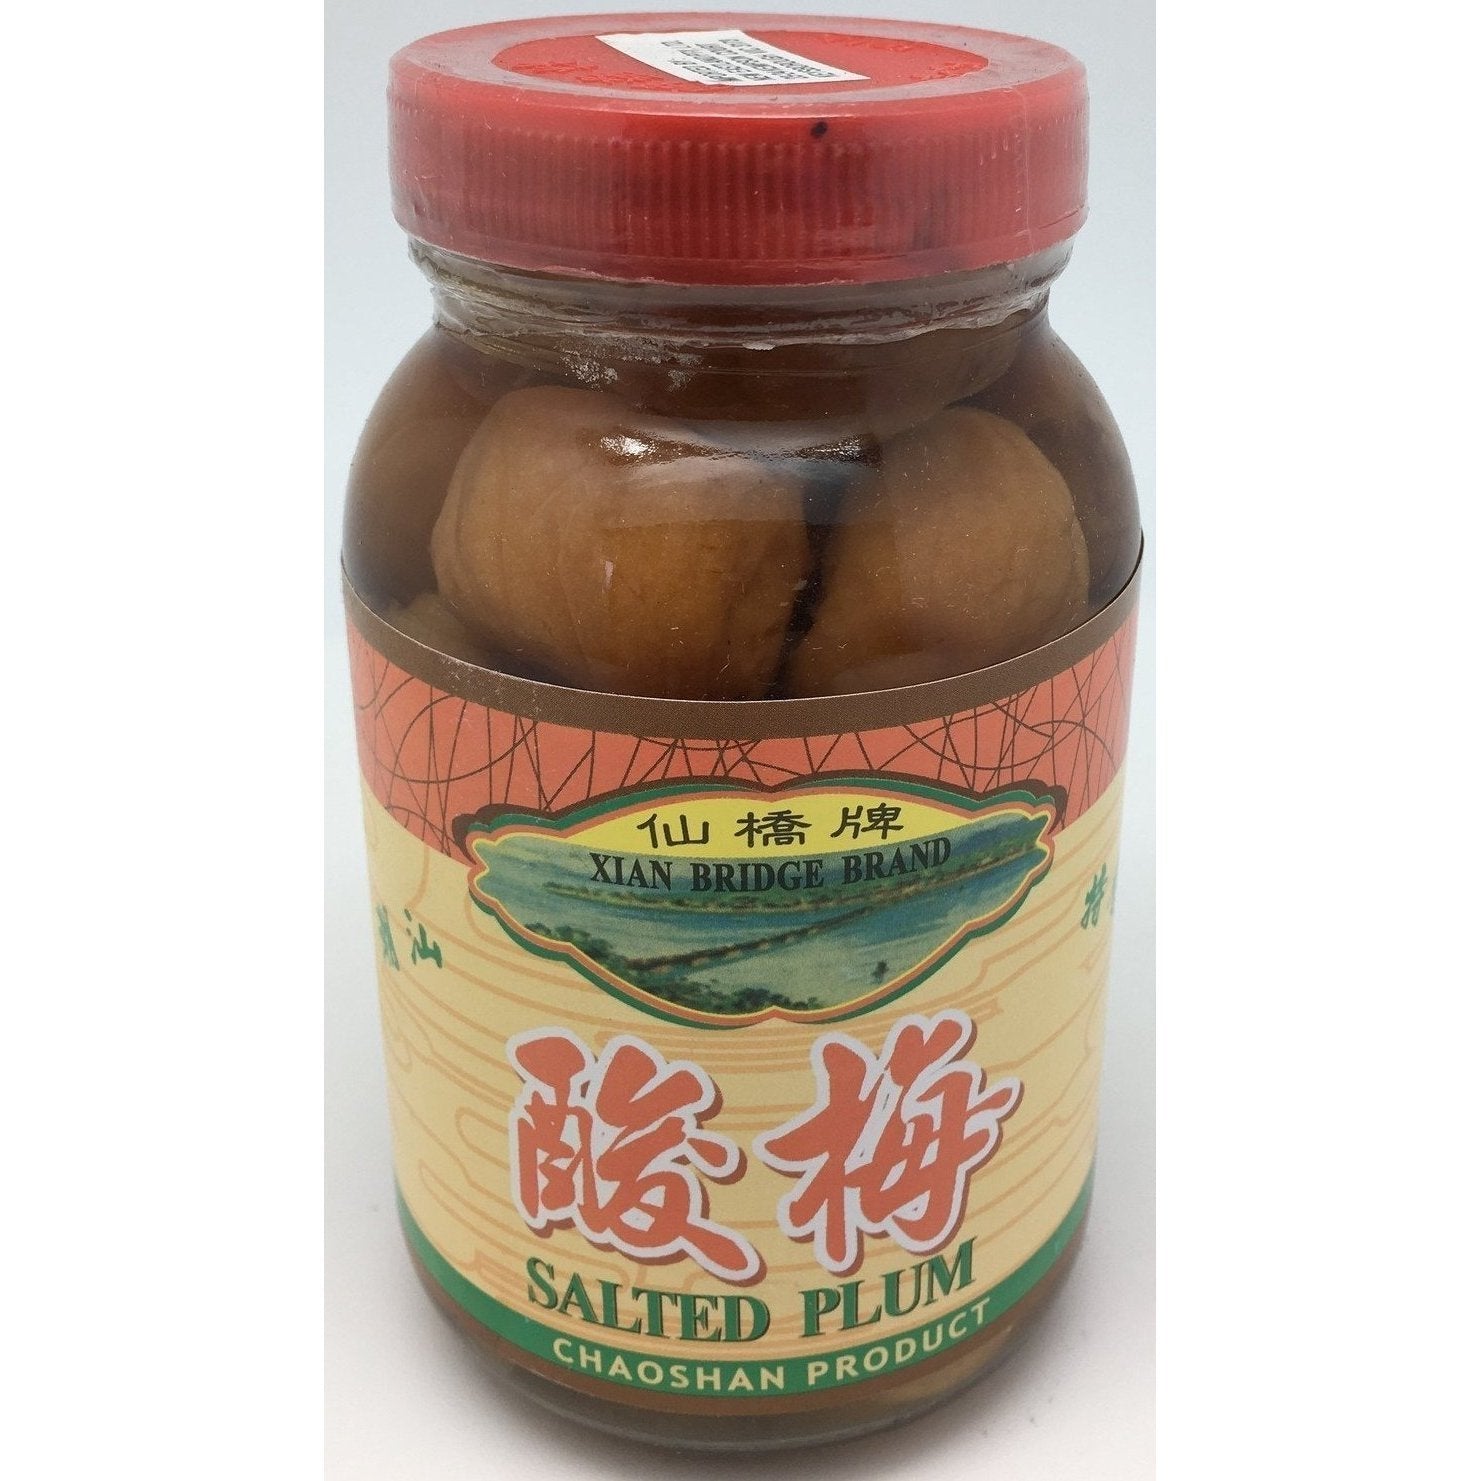 P006 Xian Bridge Brand - Salted Plum 320g - 24 jar / 1 CTN - New Eastland Pty Ltd - Asian food wholesalers